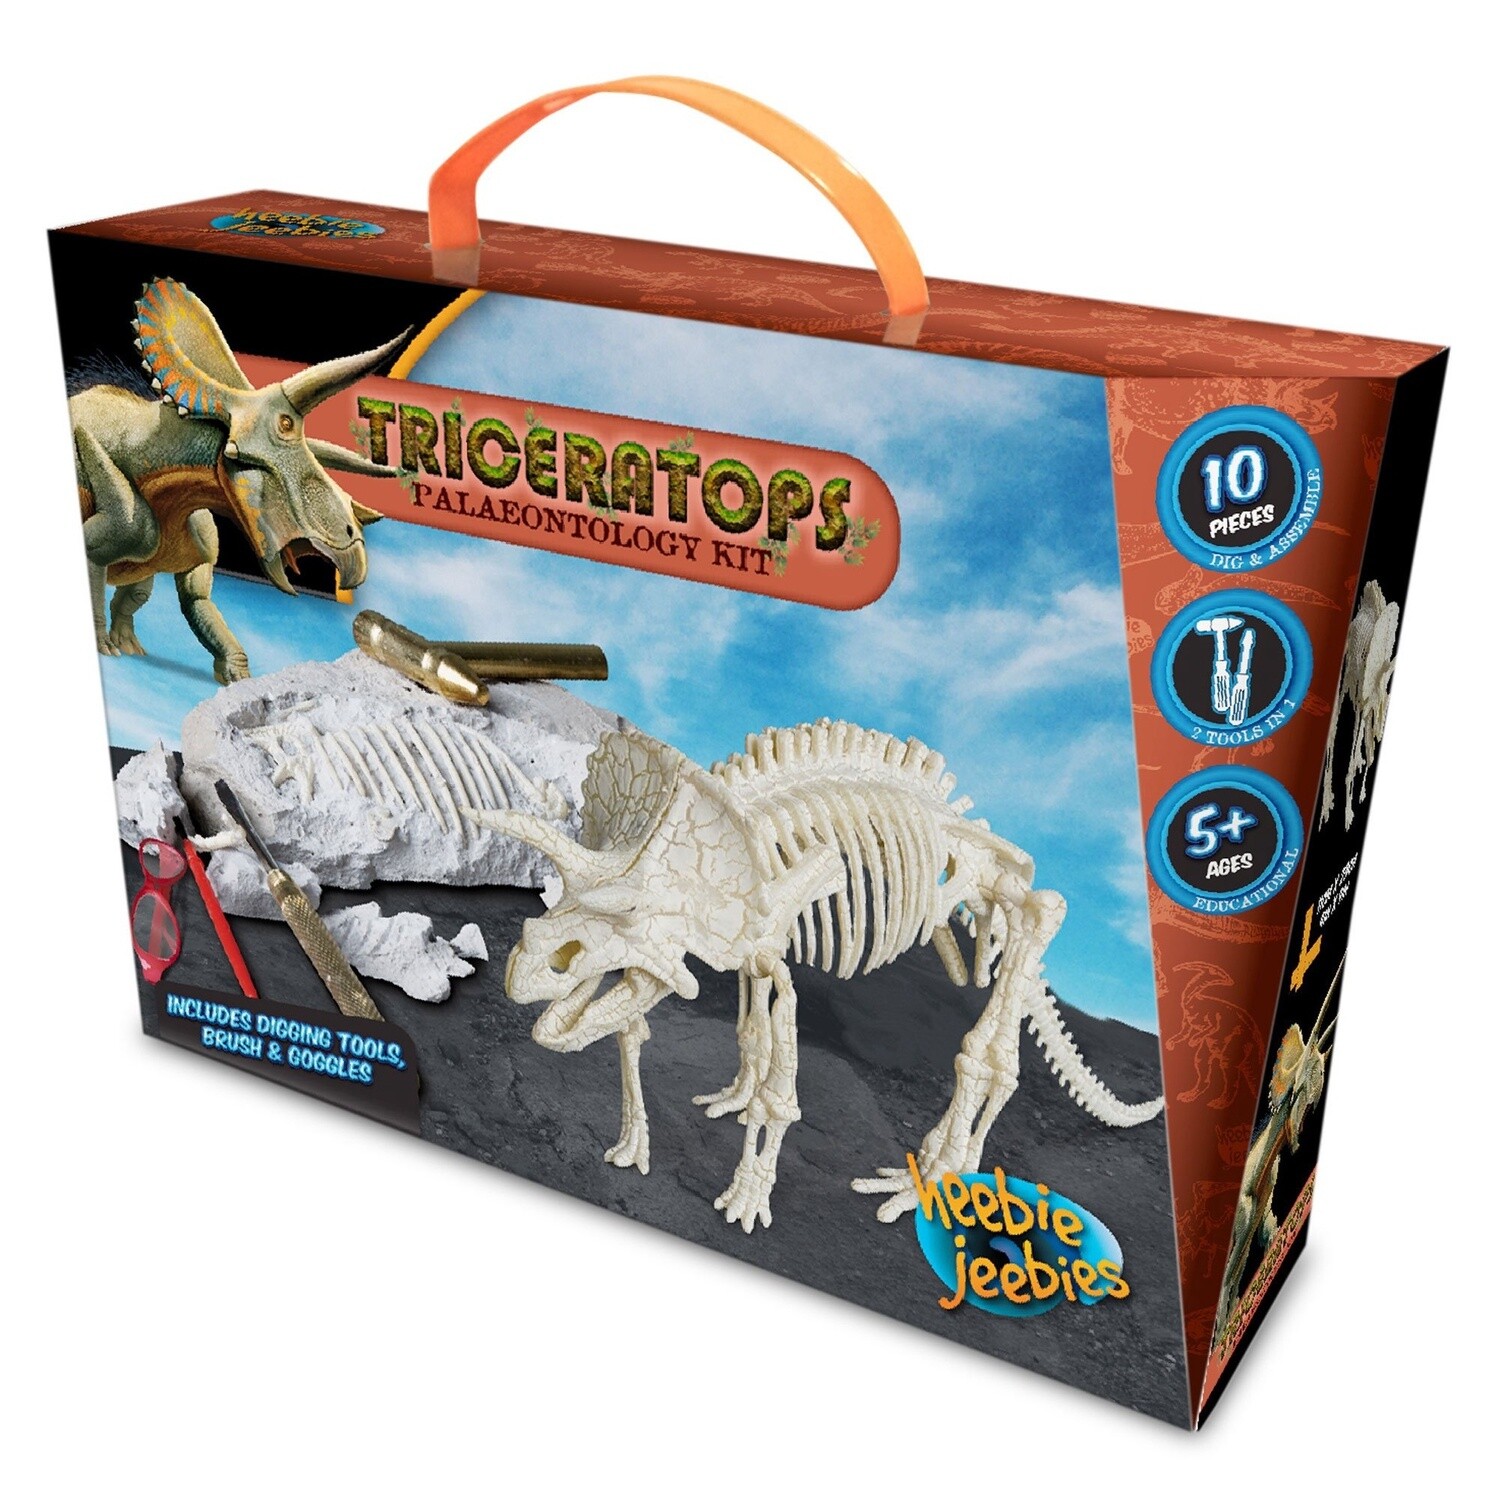 Heebie Jeebies Paleontology Kit - Triceratops